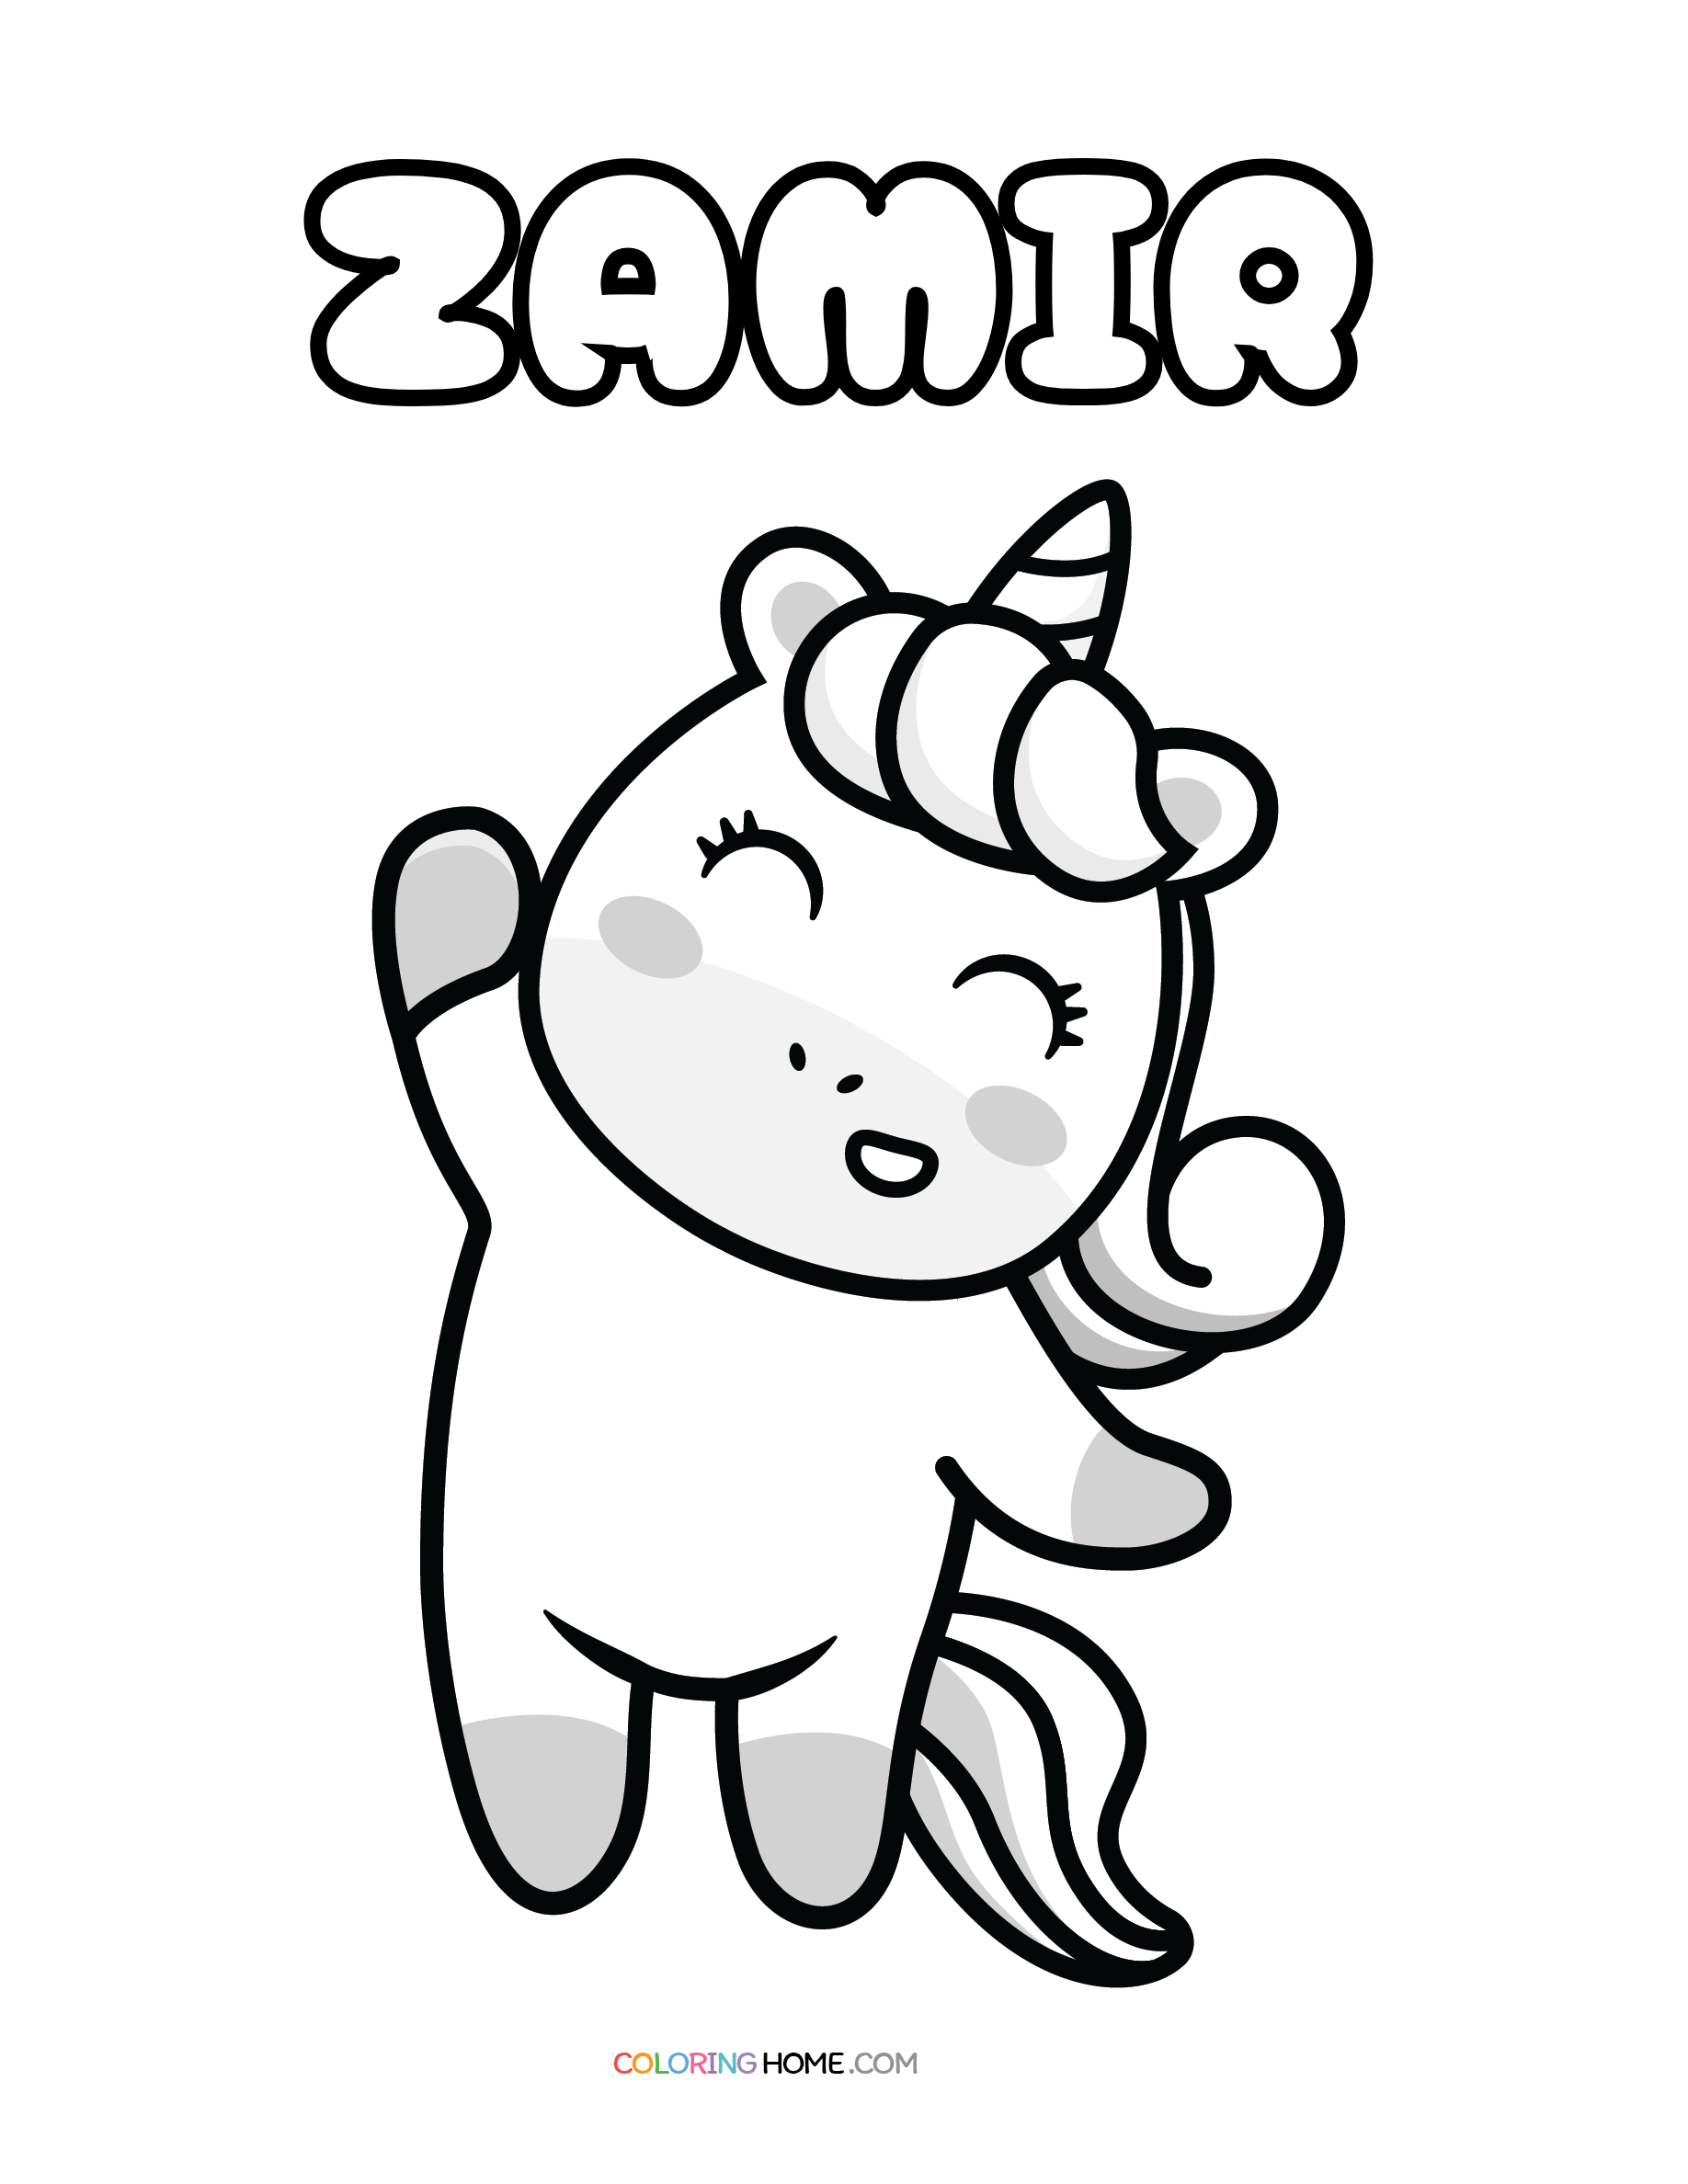 Zamir unicorn coloring page